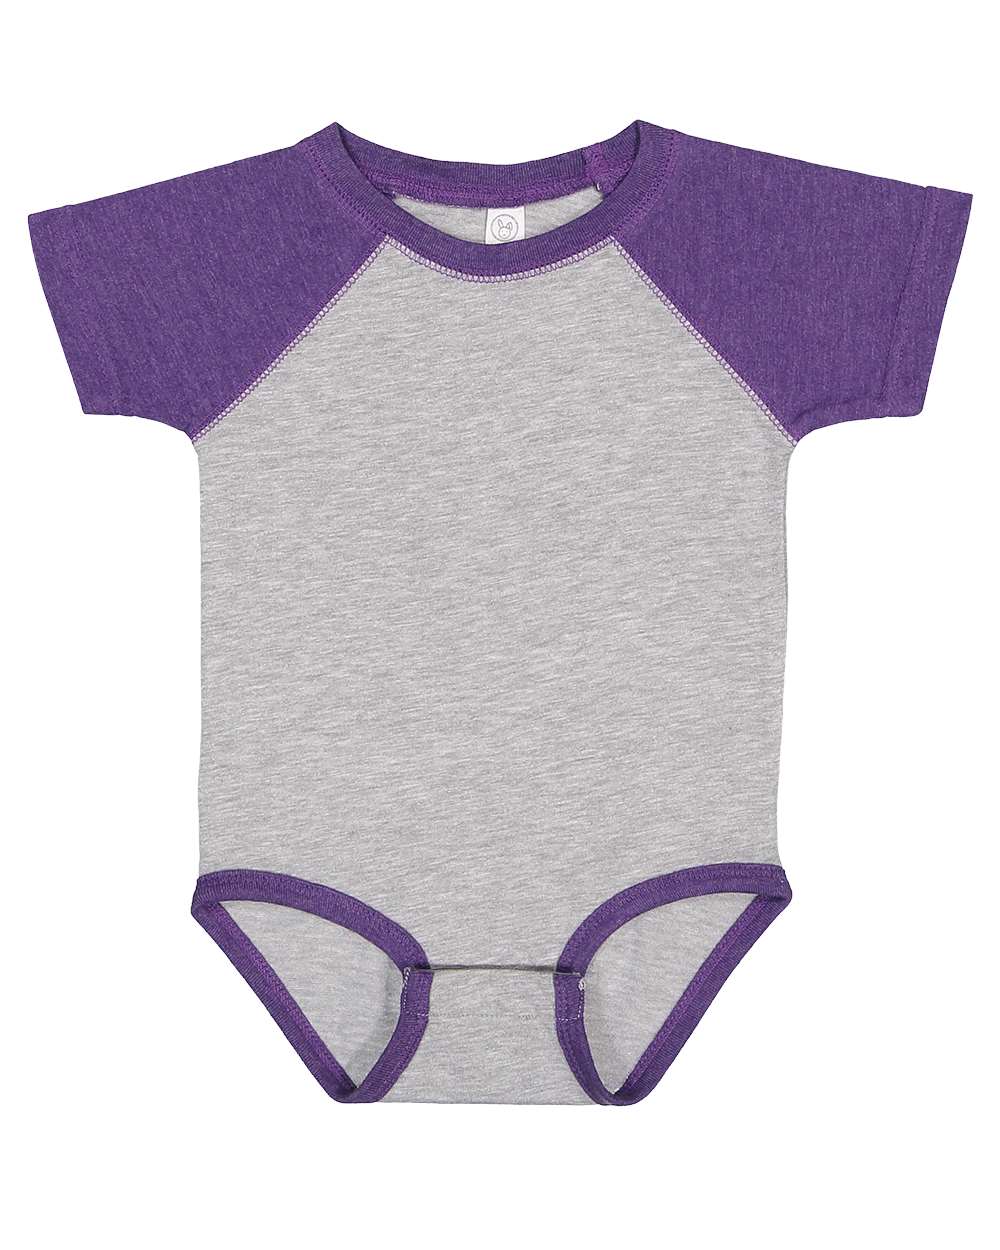 rabbit skins infant baseball jersey bodysuit onesie vintage heather grey vintage purple